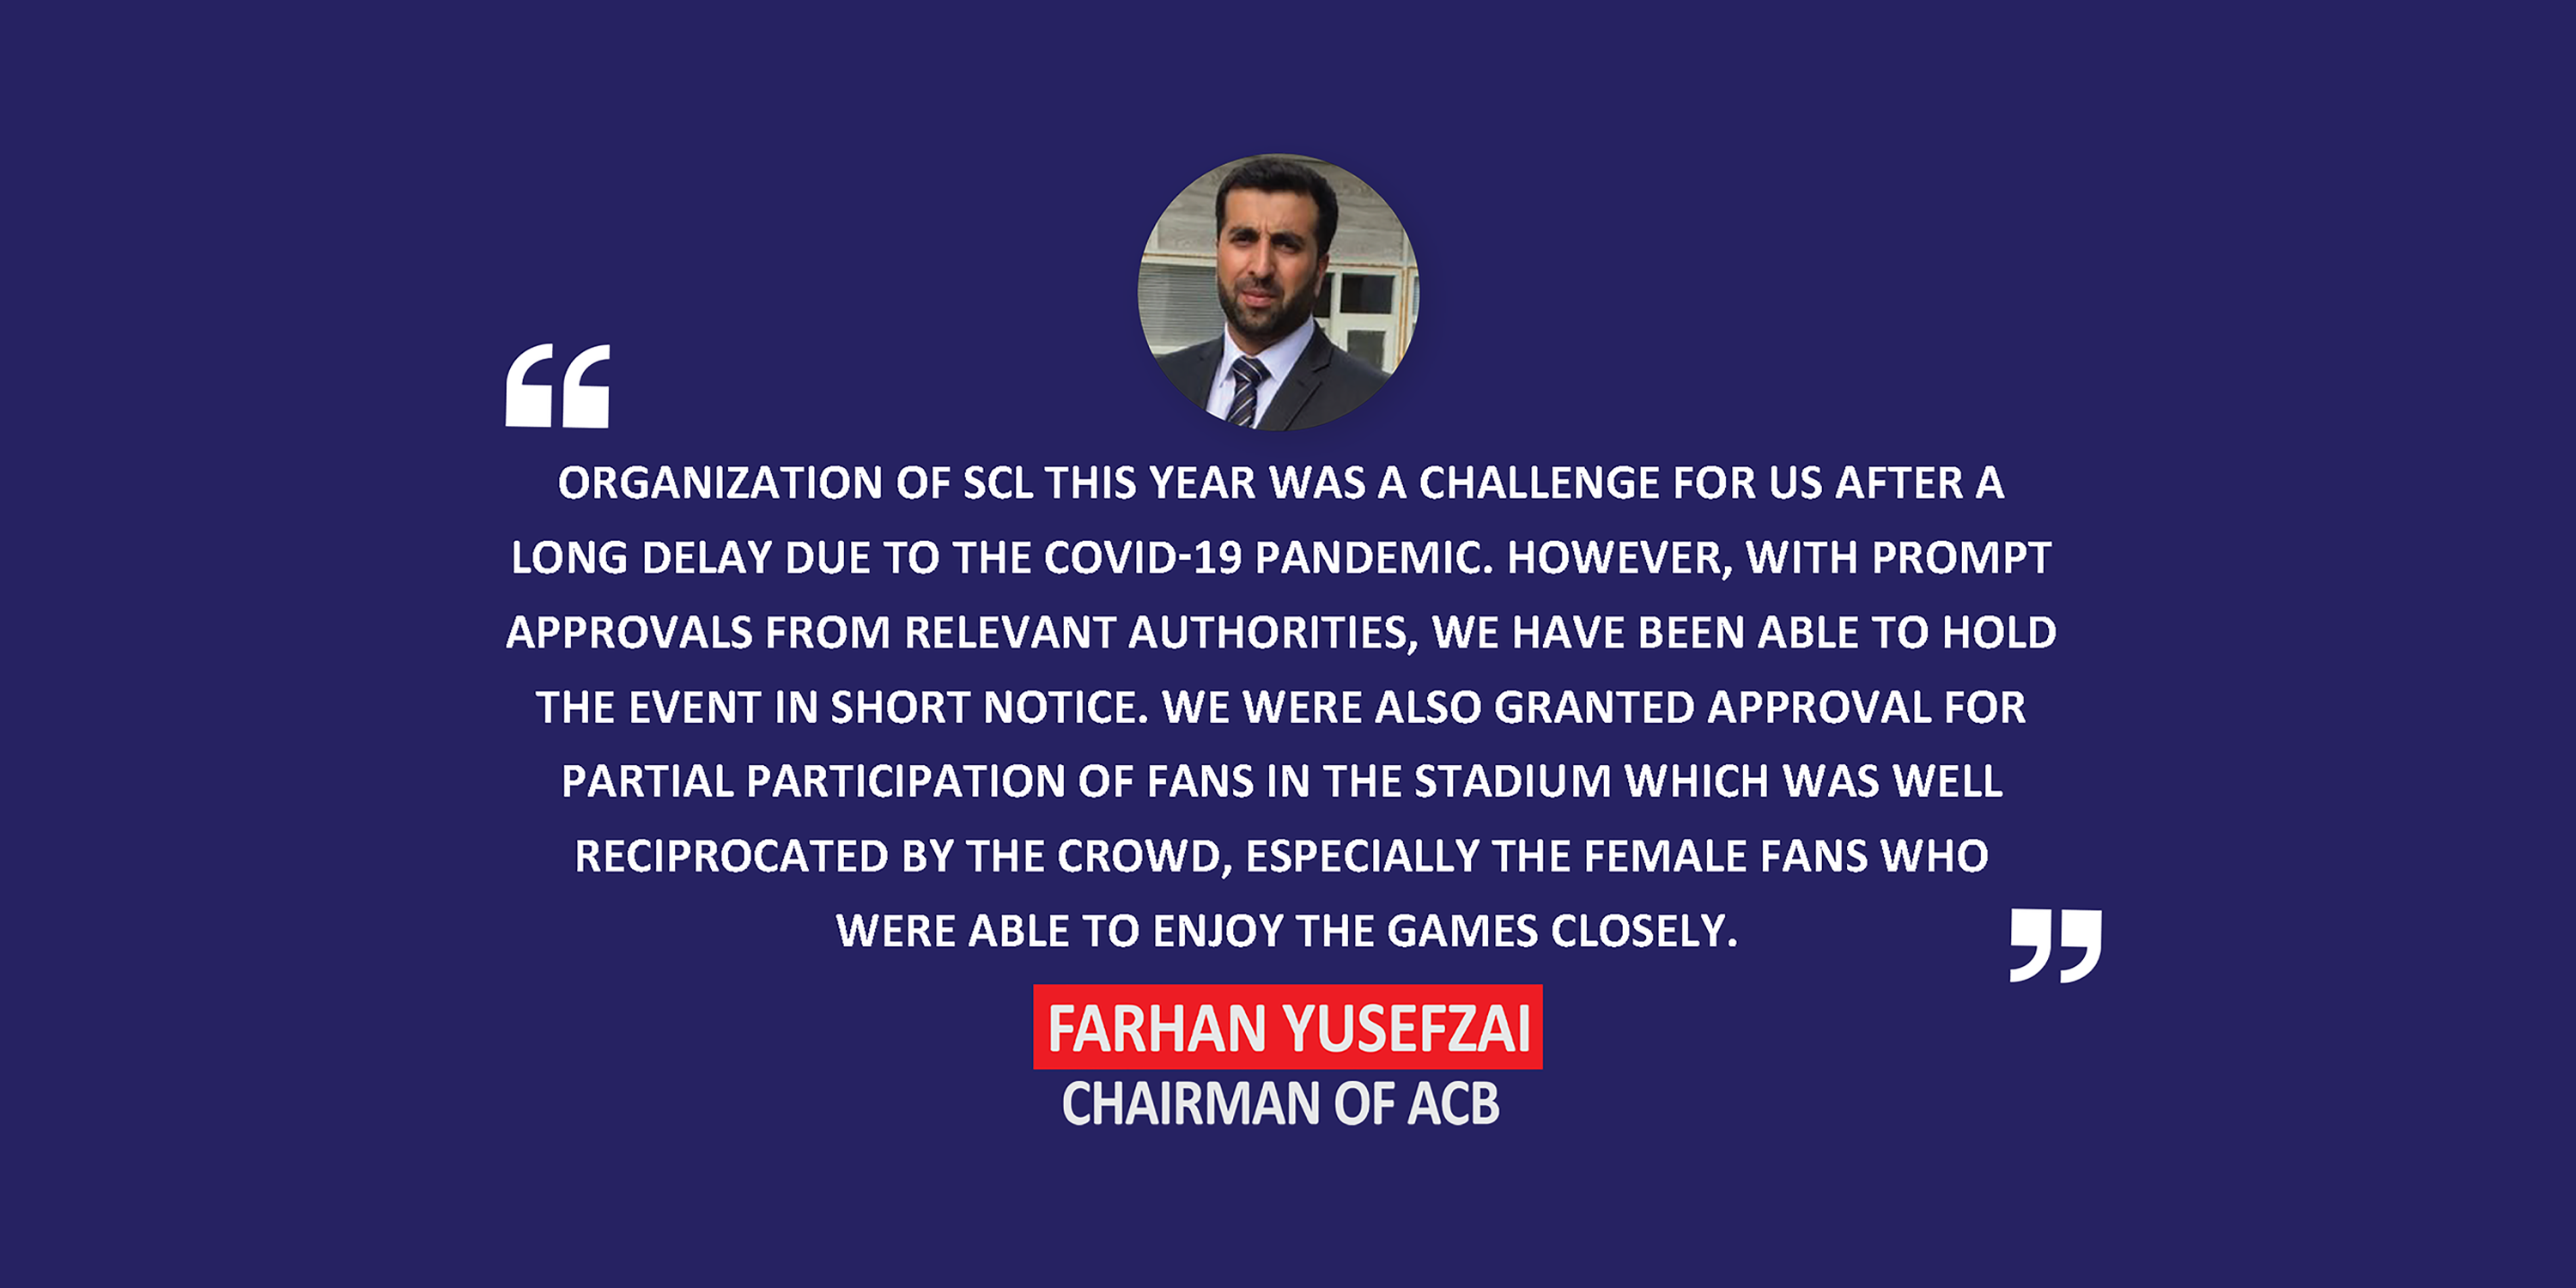 Farhan Yusefzai, Chairman of ACB